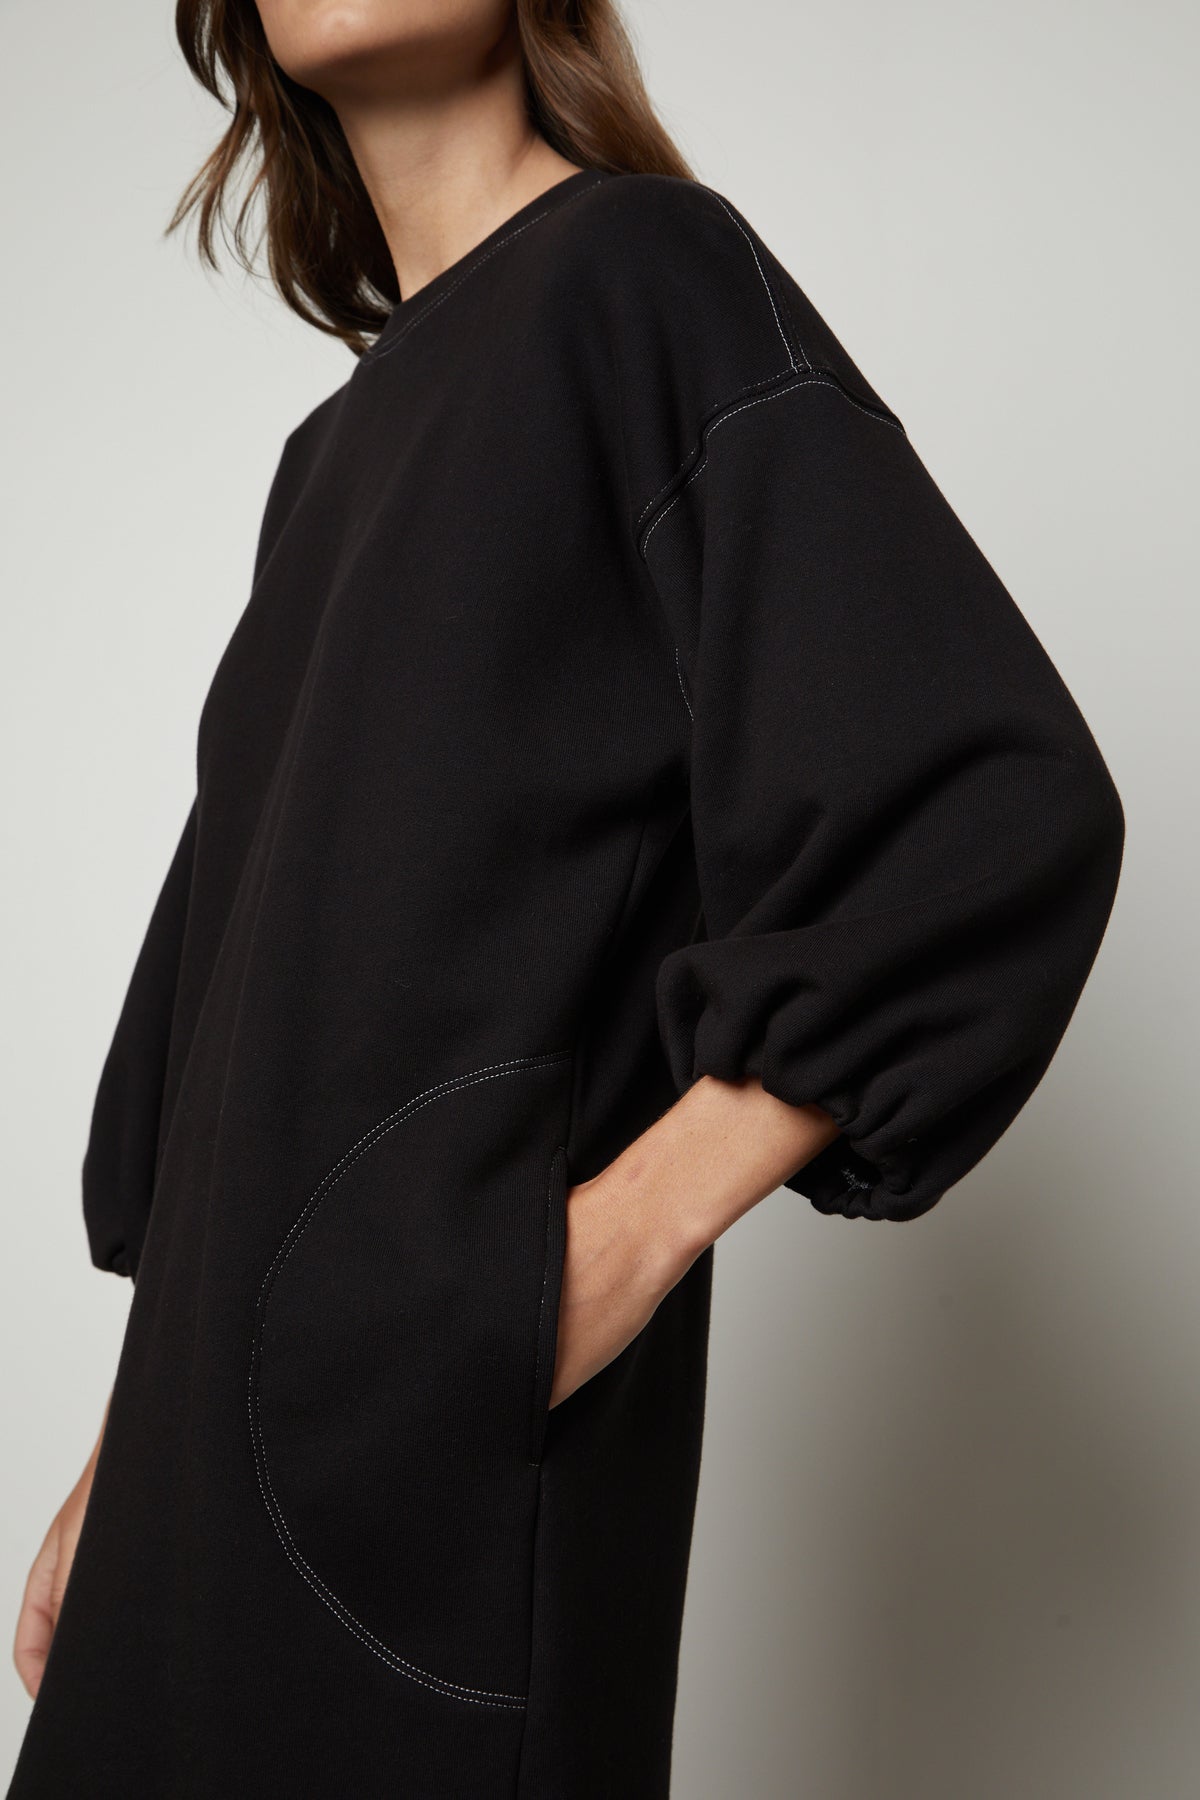   The model is wearing a Velvet by Graham & Spencer black sleeveless dress with pockets. 